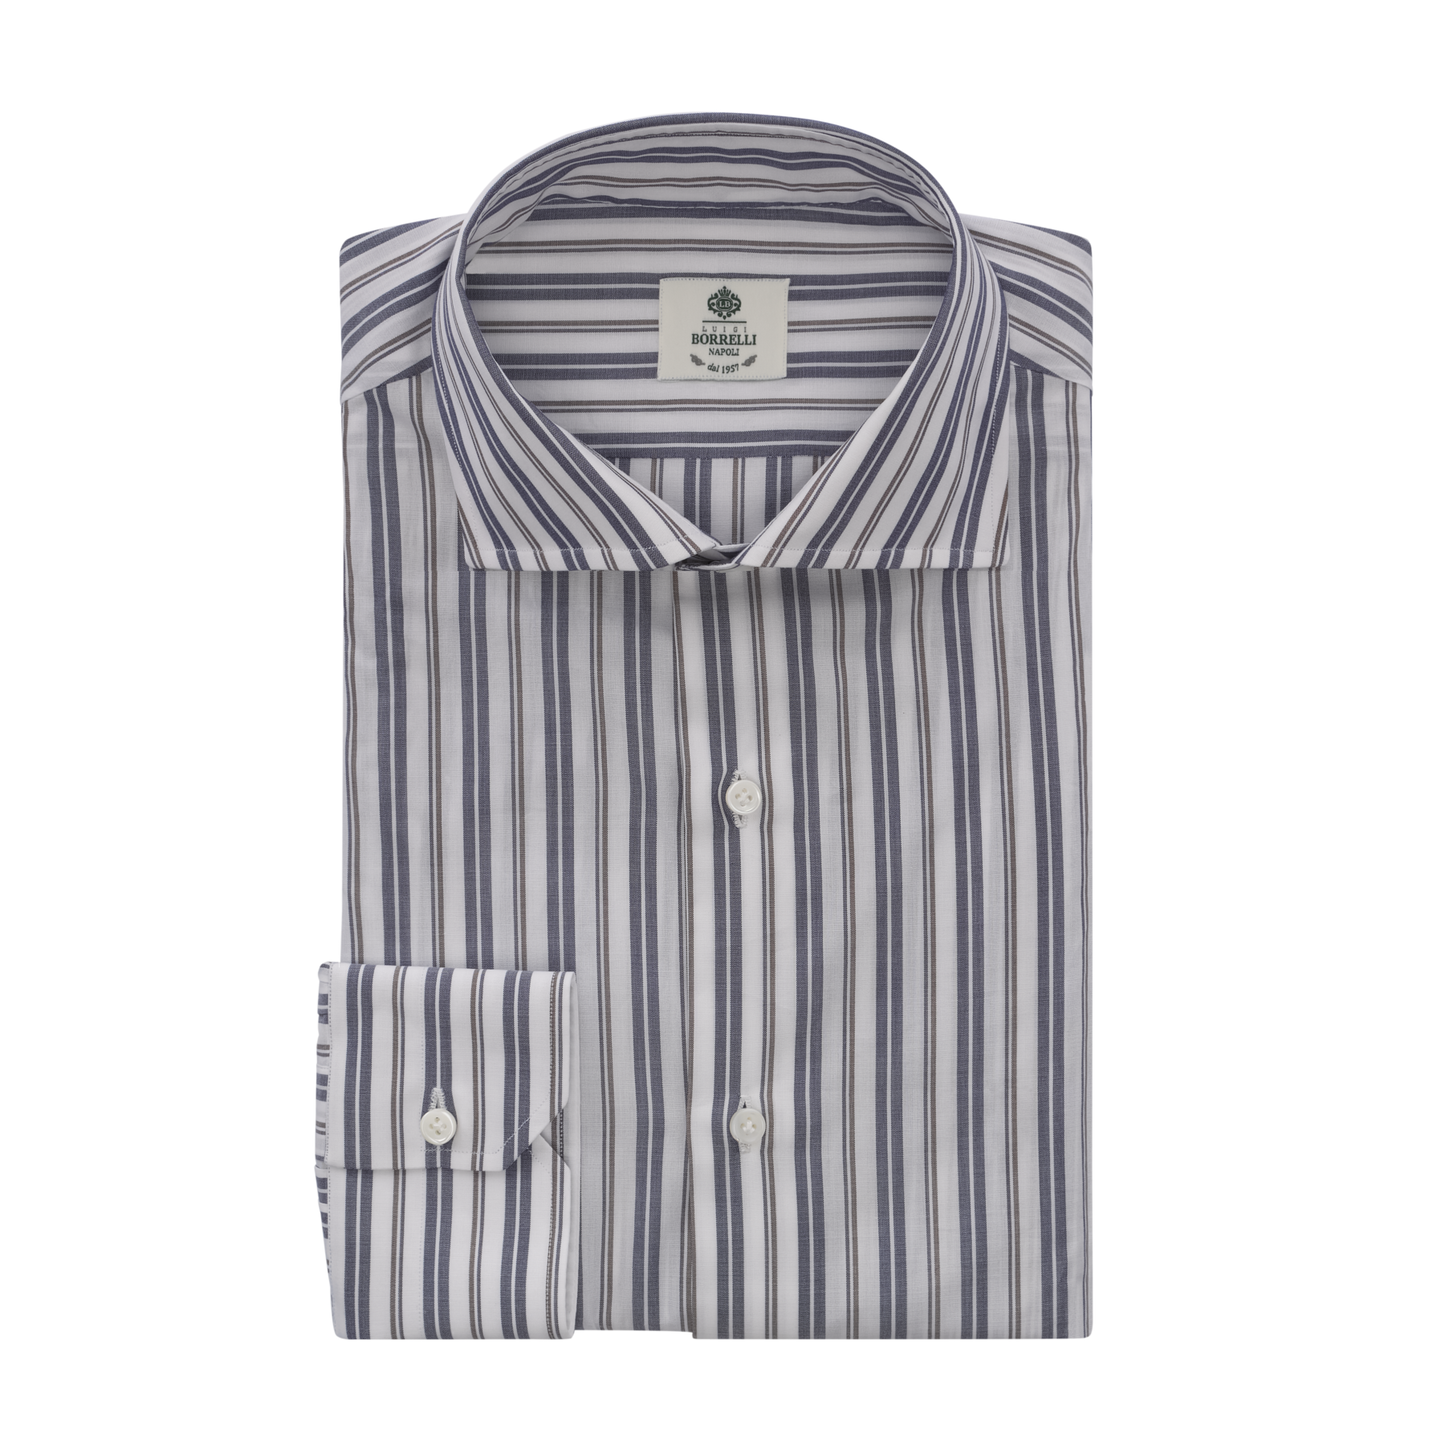 Luigi Borrelli Striped Cotton Shirt in White and Blue - SARTALE